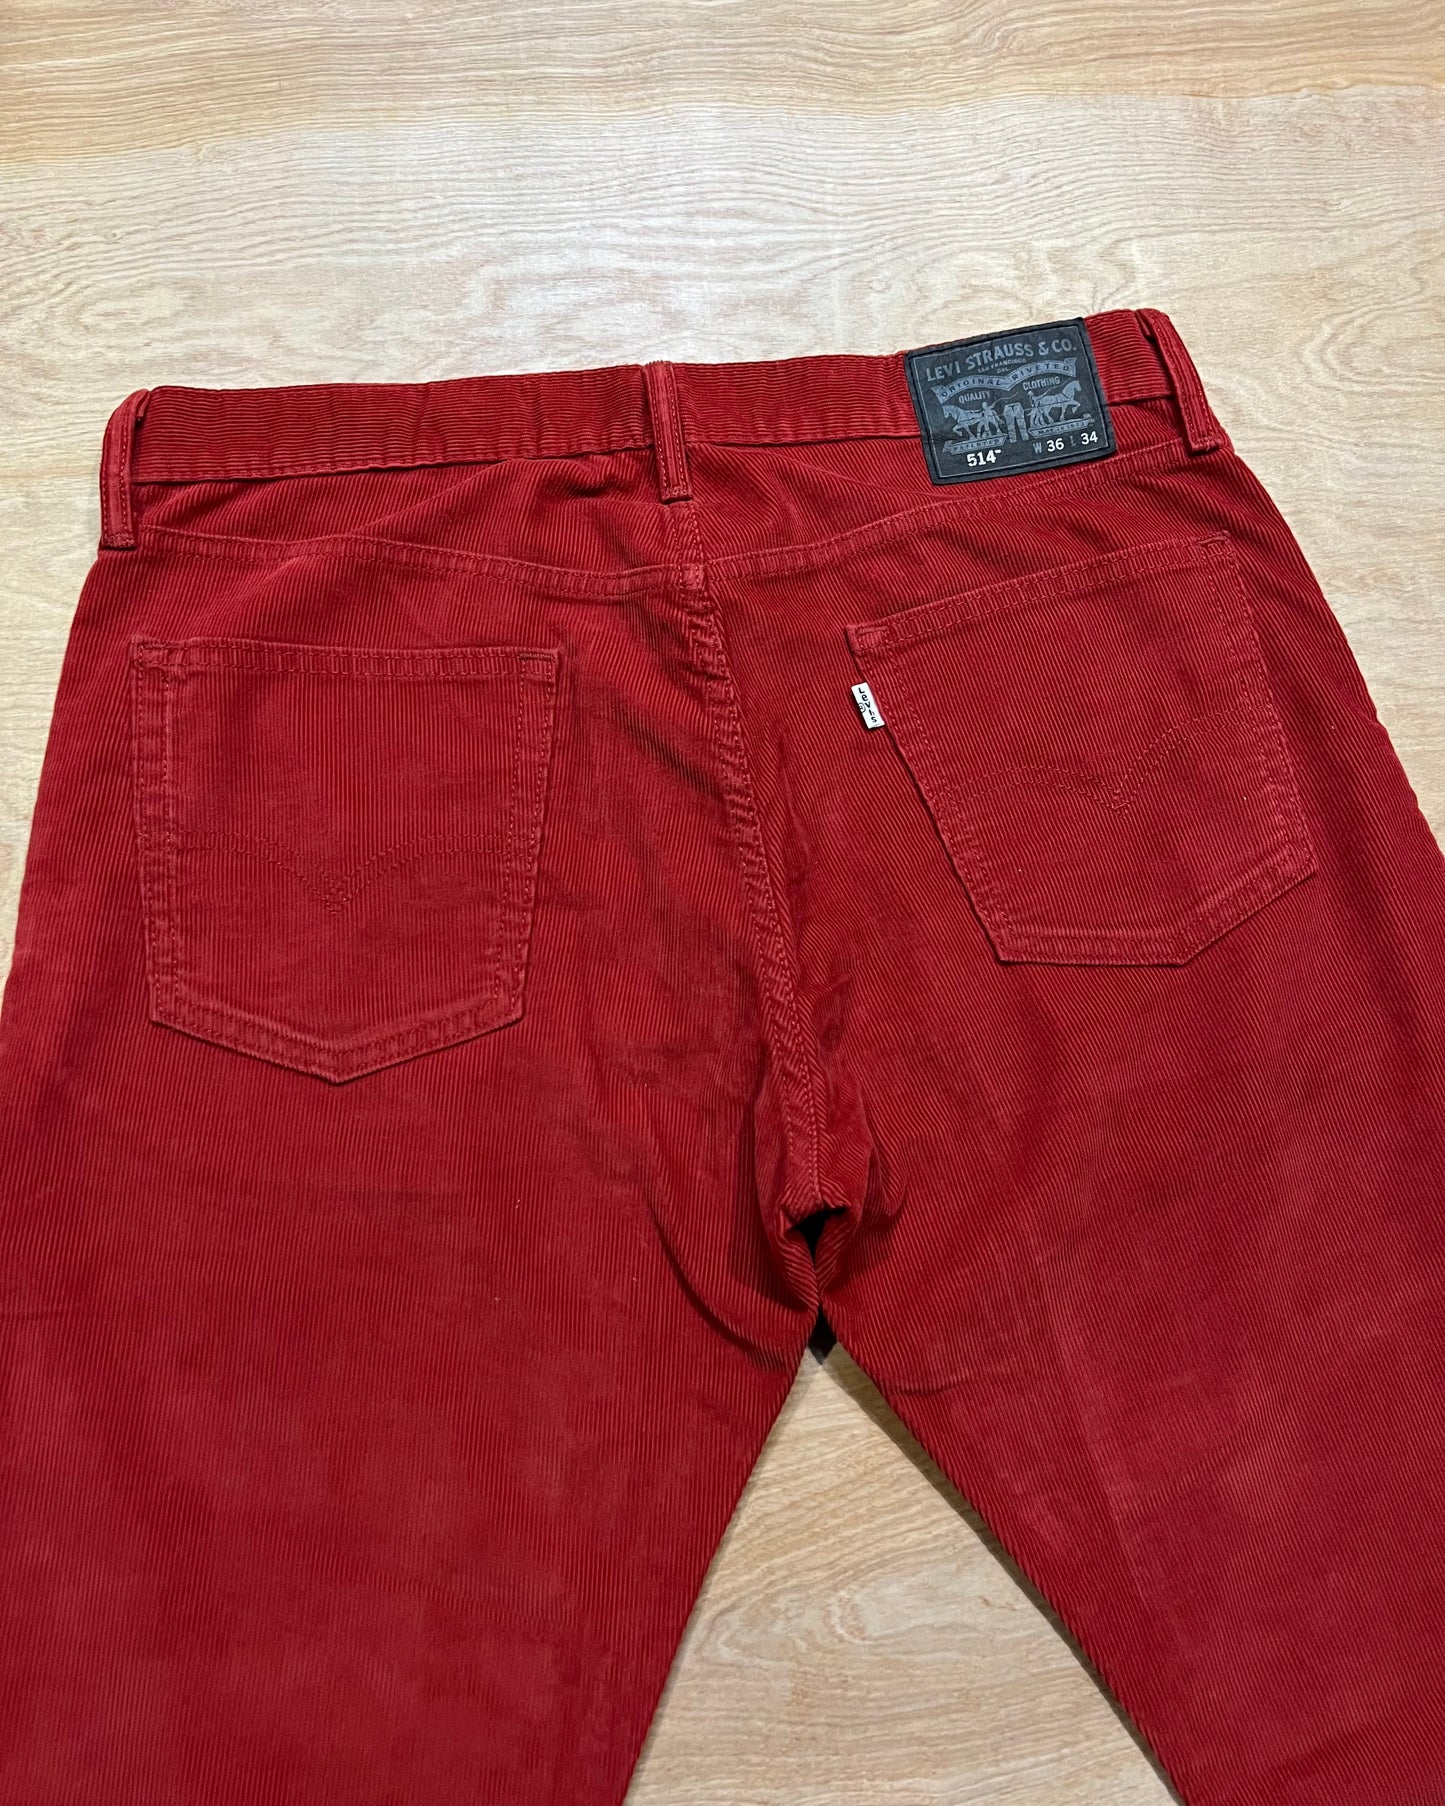 Levi's - 514 Red Corduroy Pants